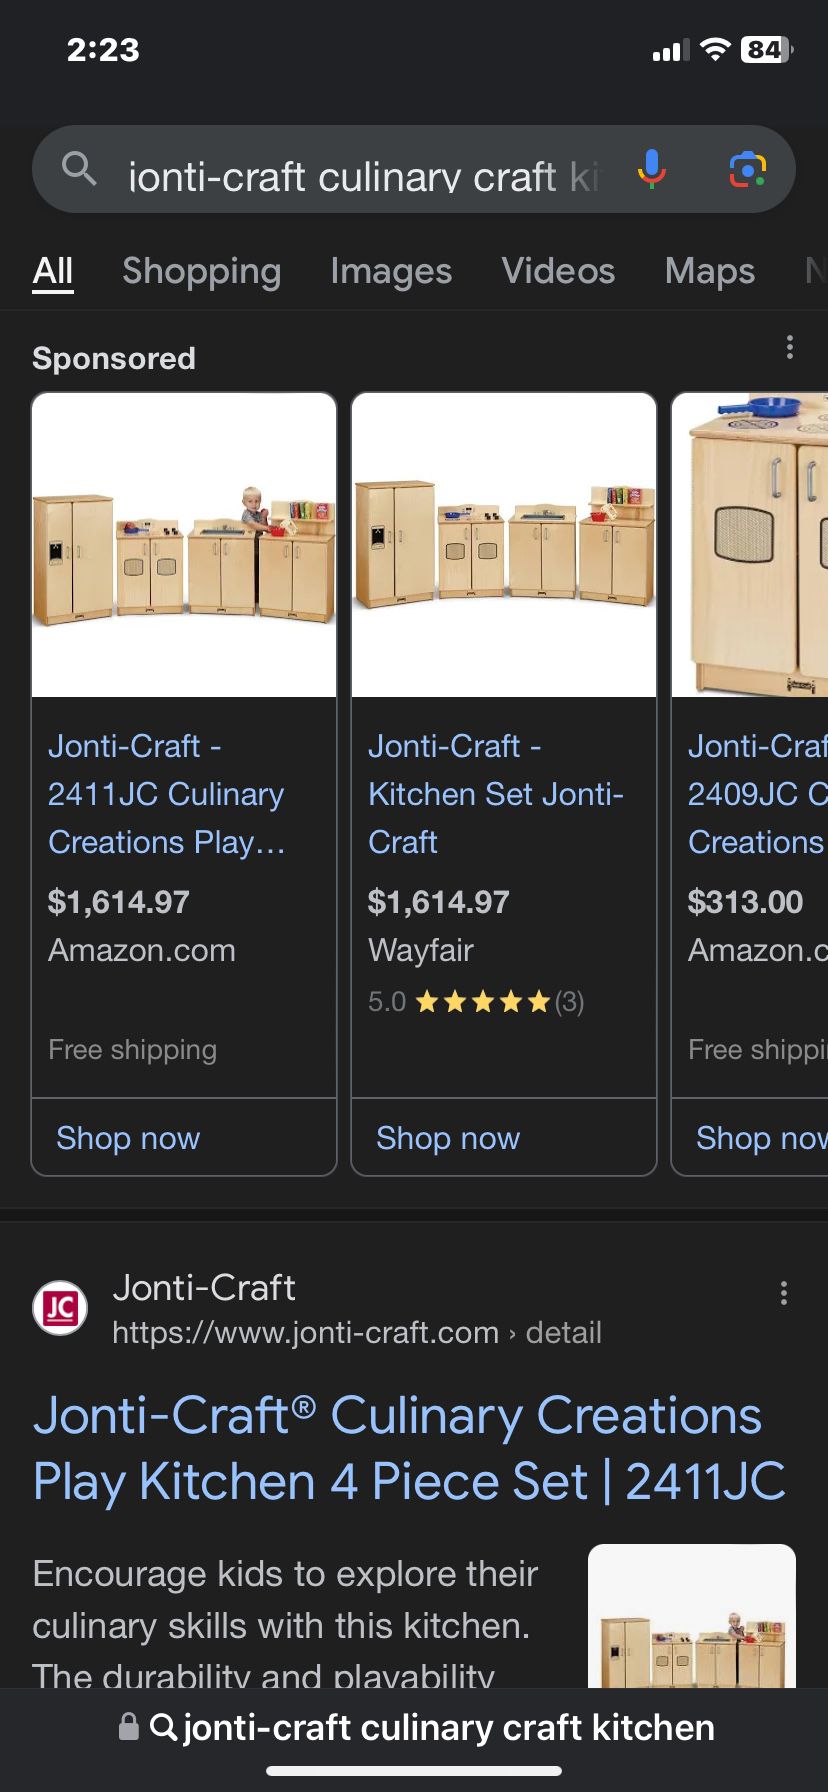 Jonti-Craft Culinary Creations Play Kitchen